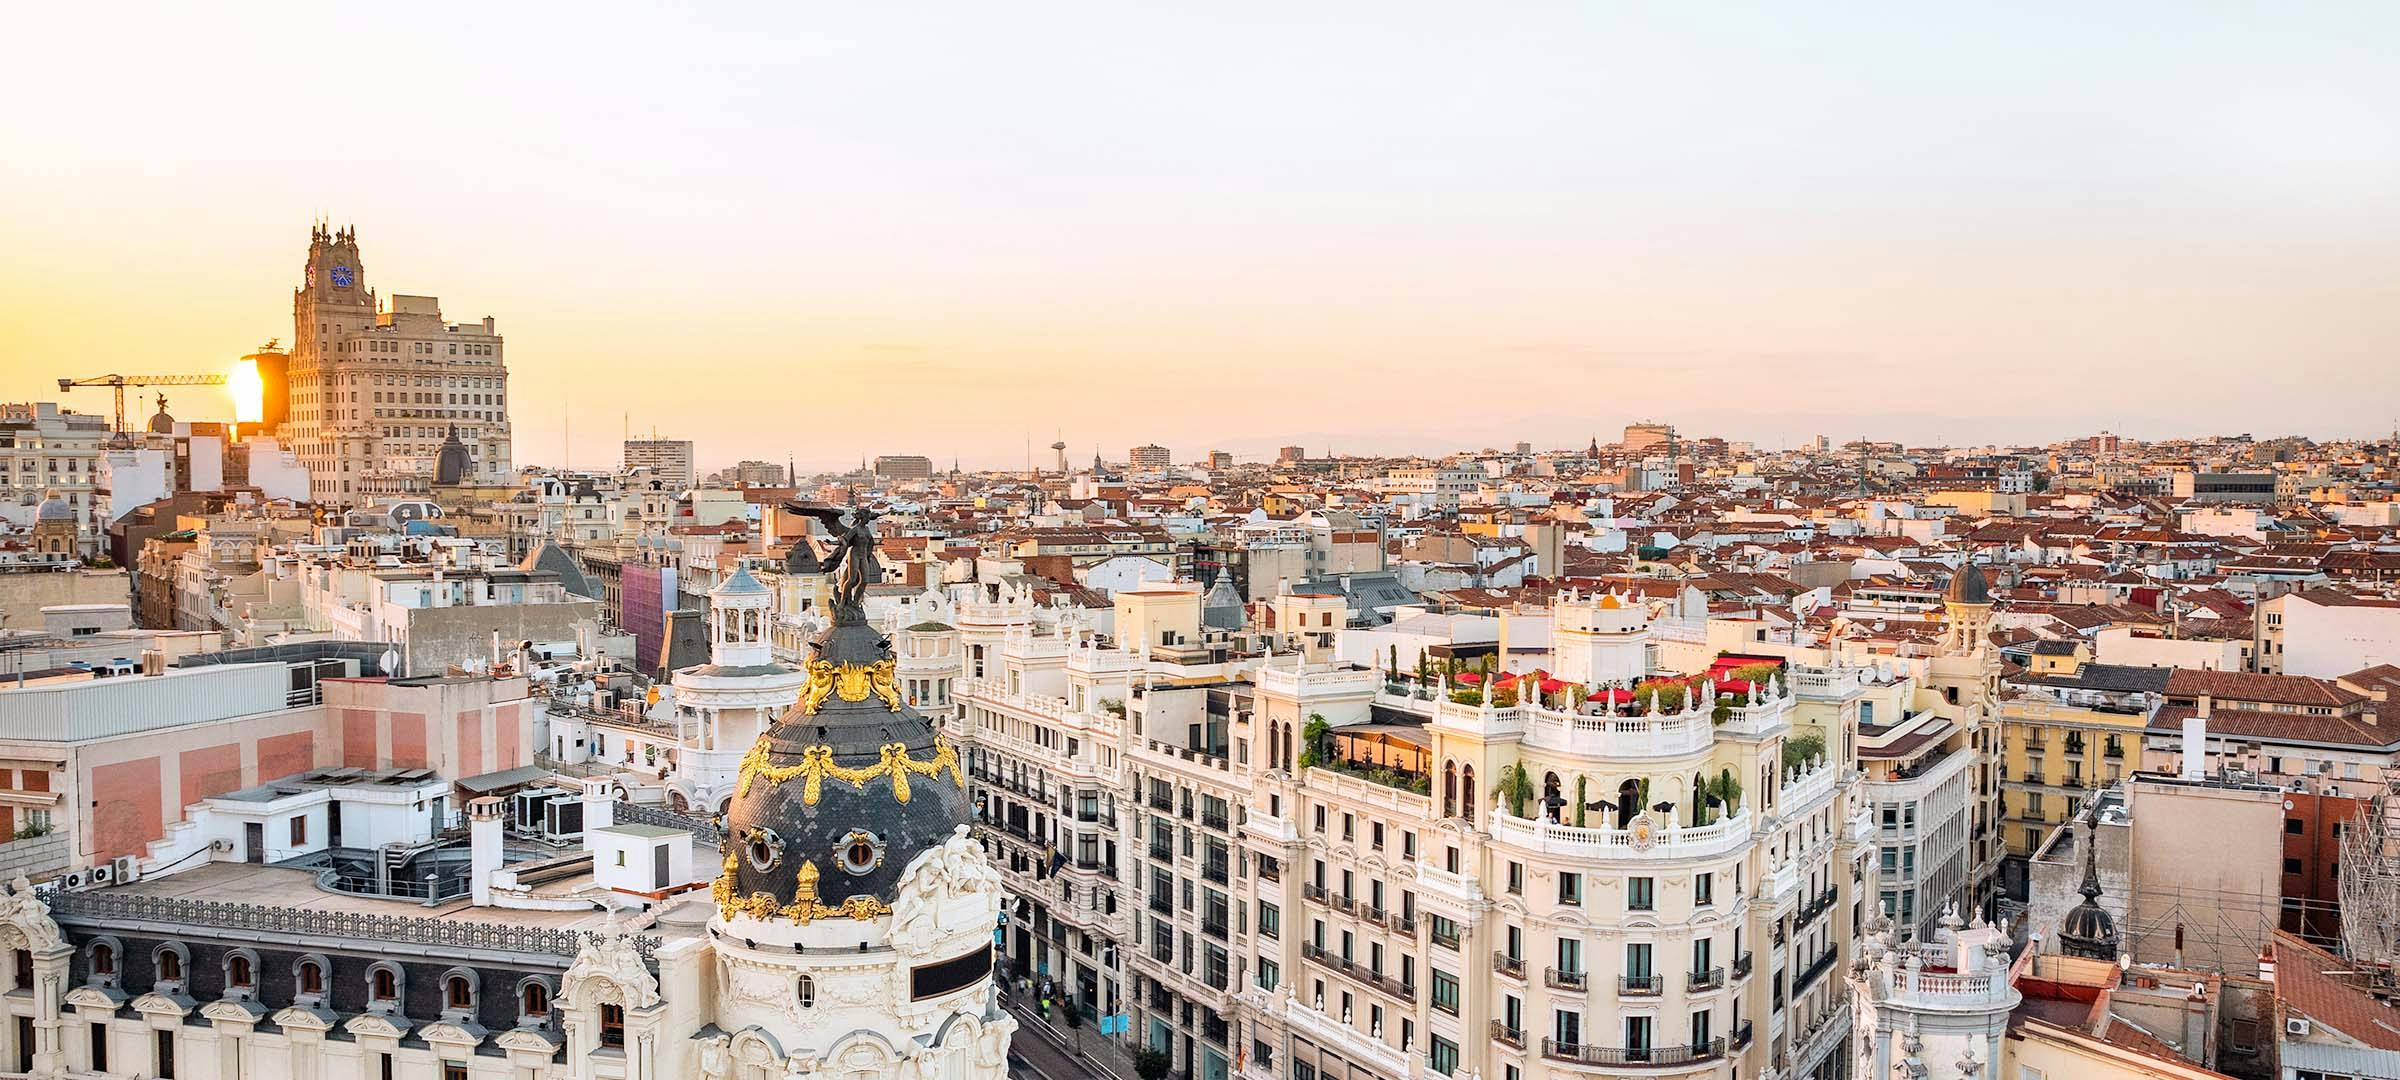 Skyline View of Madrid